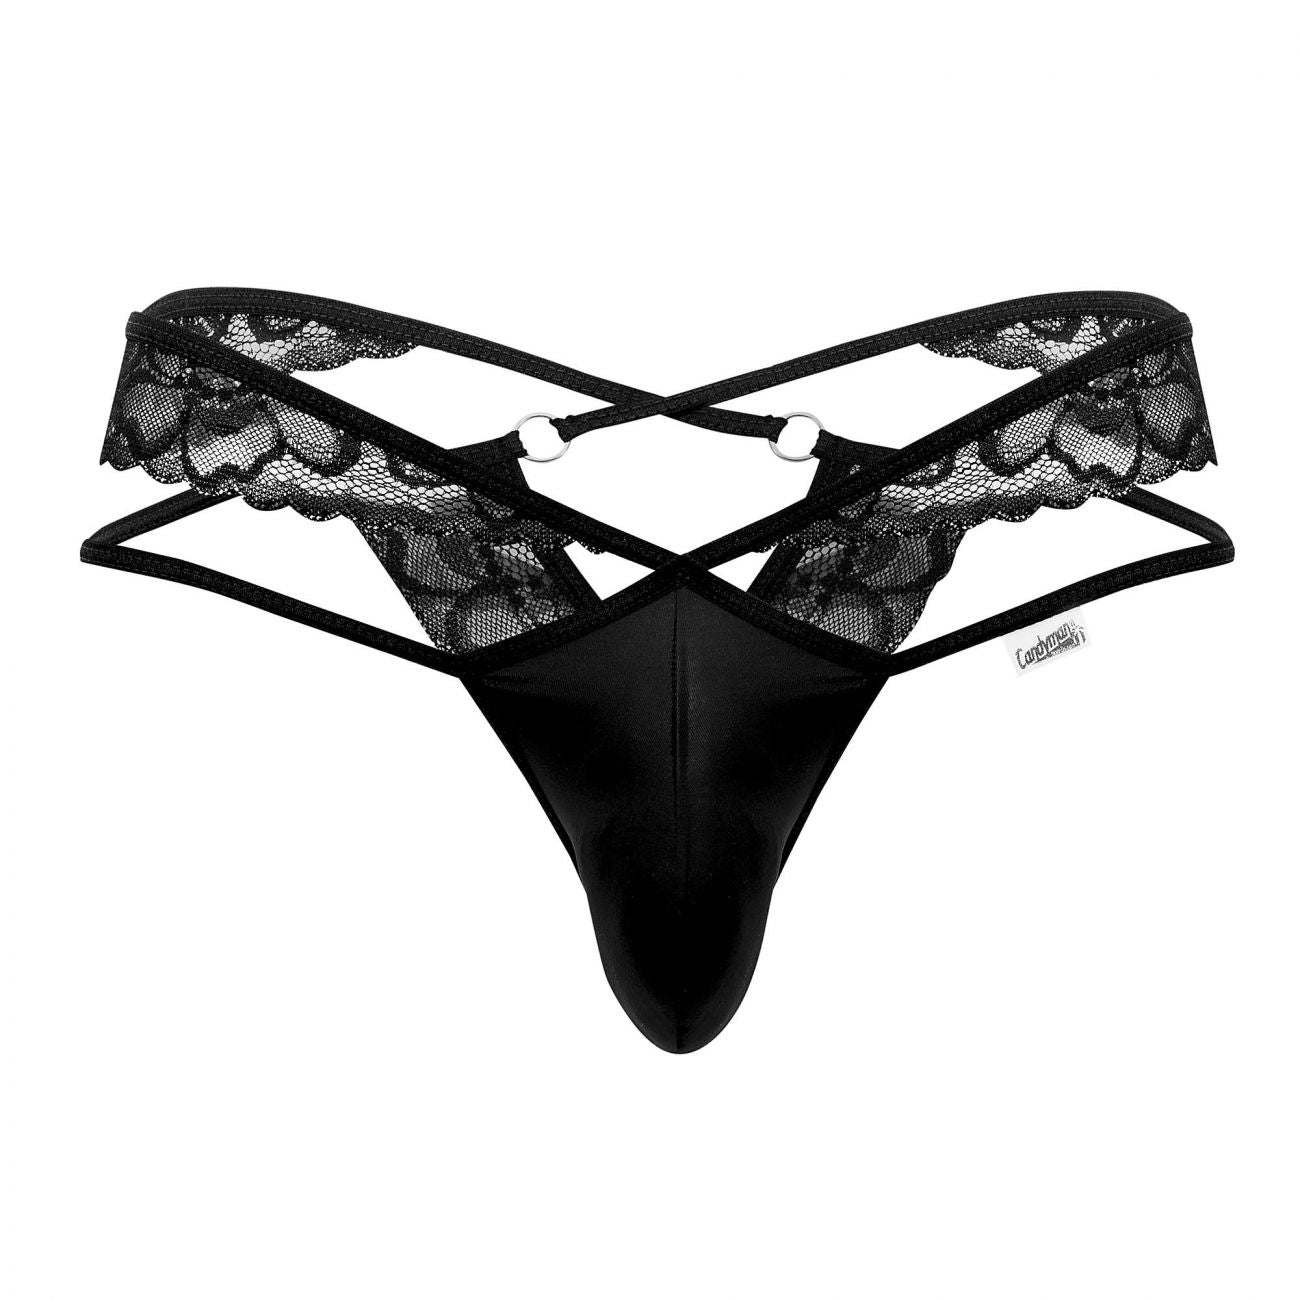 CandyMan 99560 Lace Thongs Black